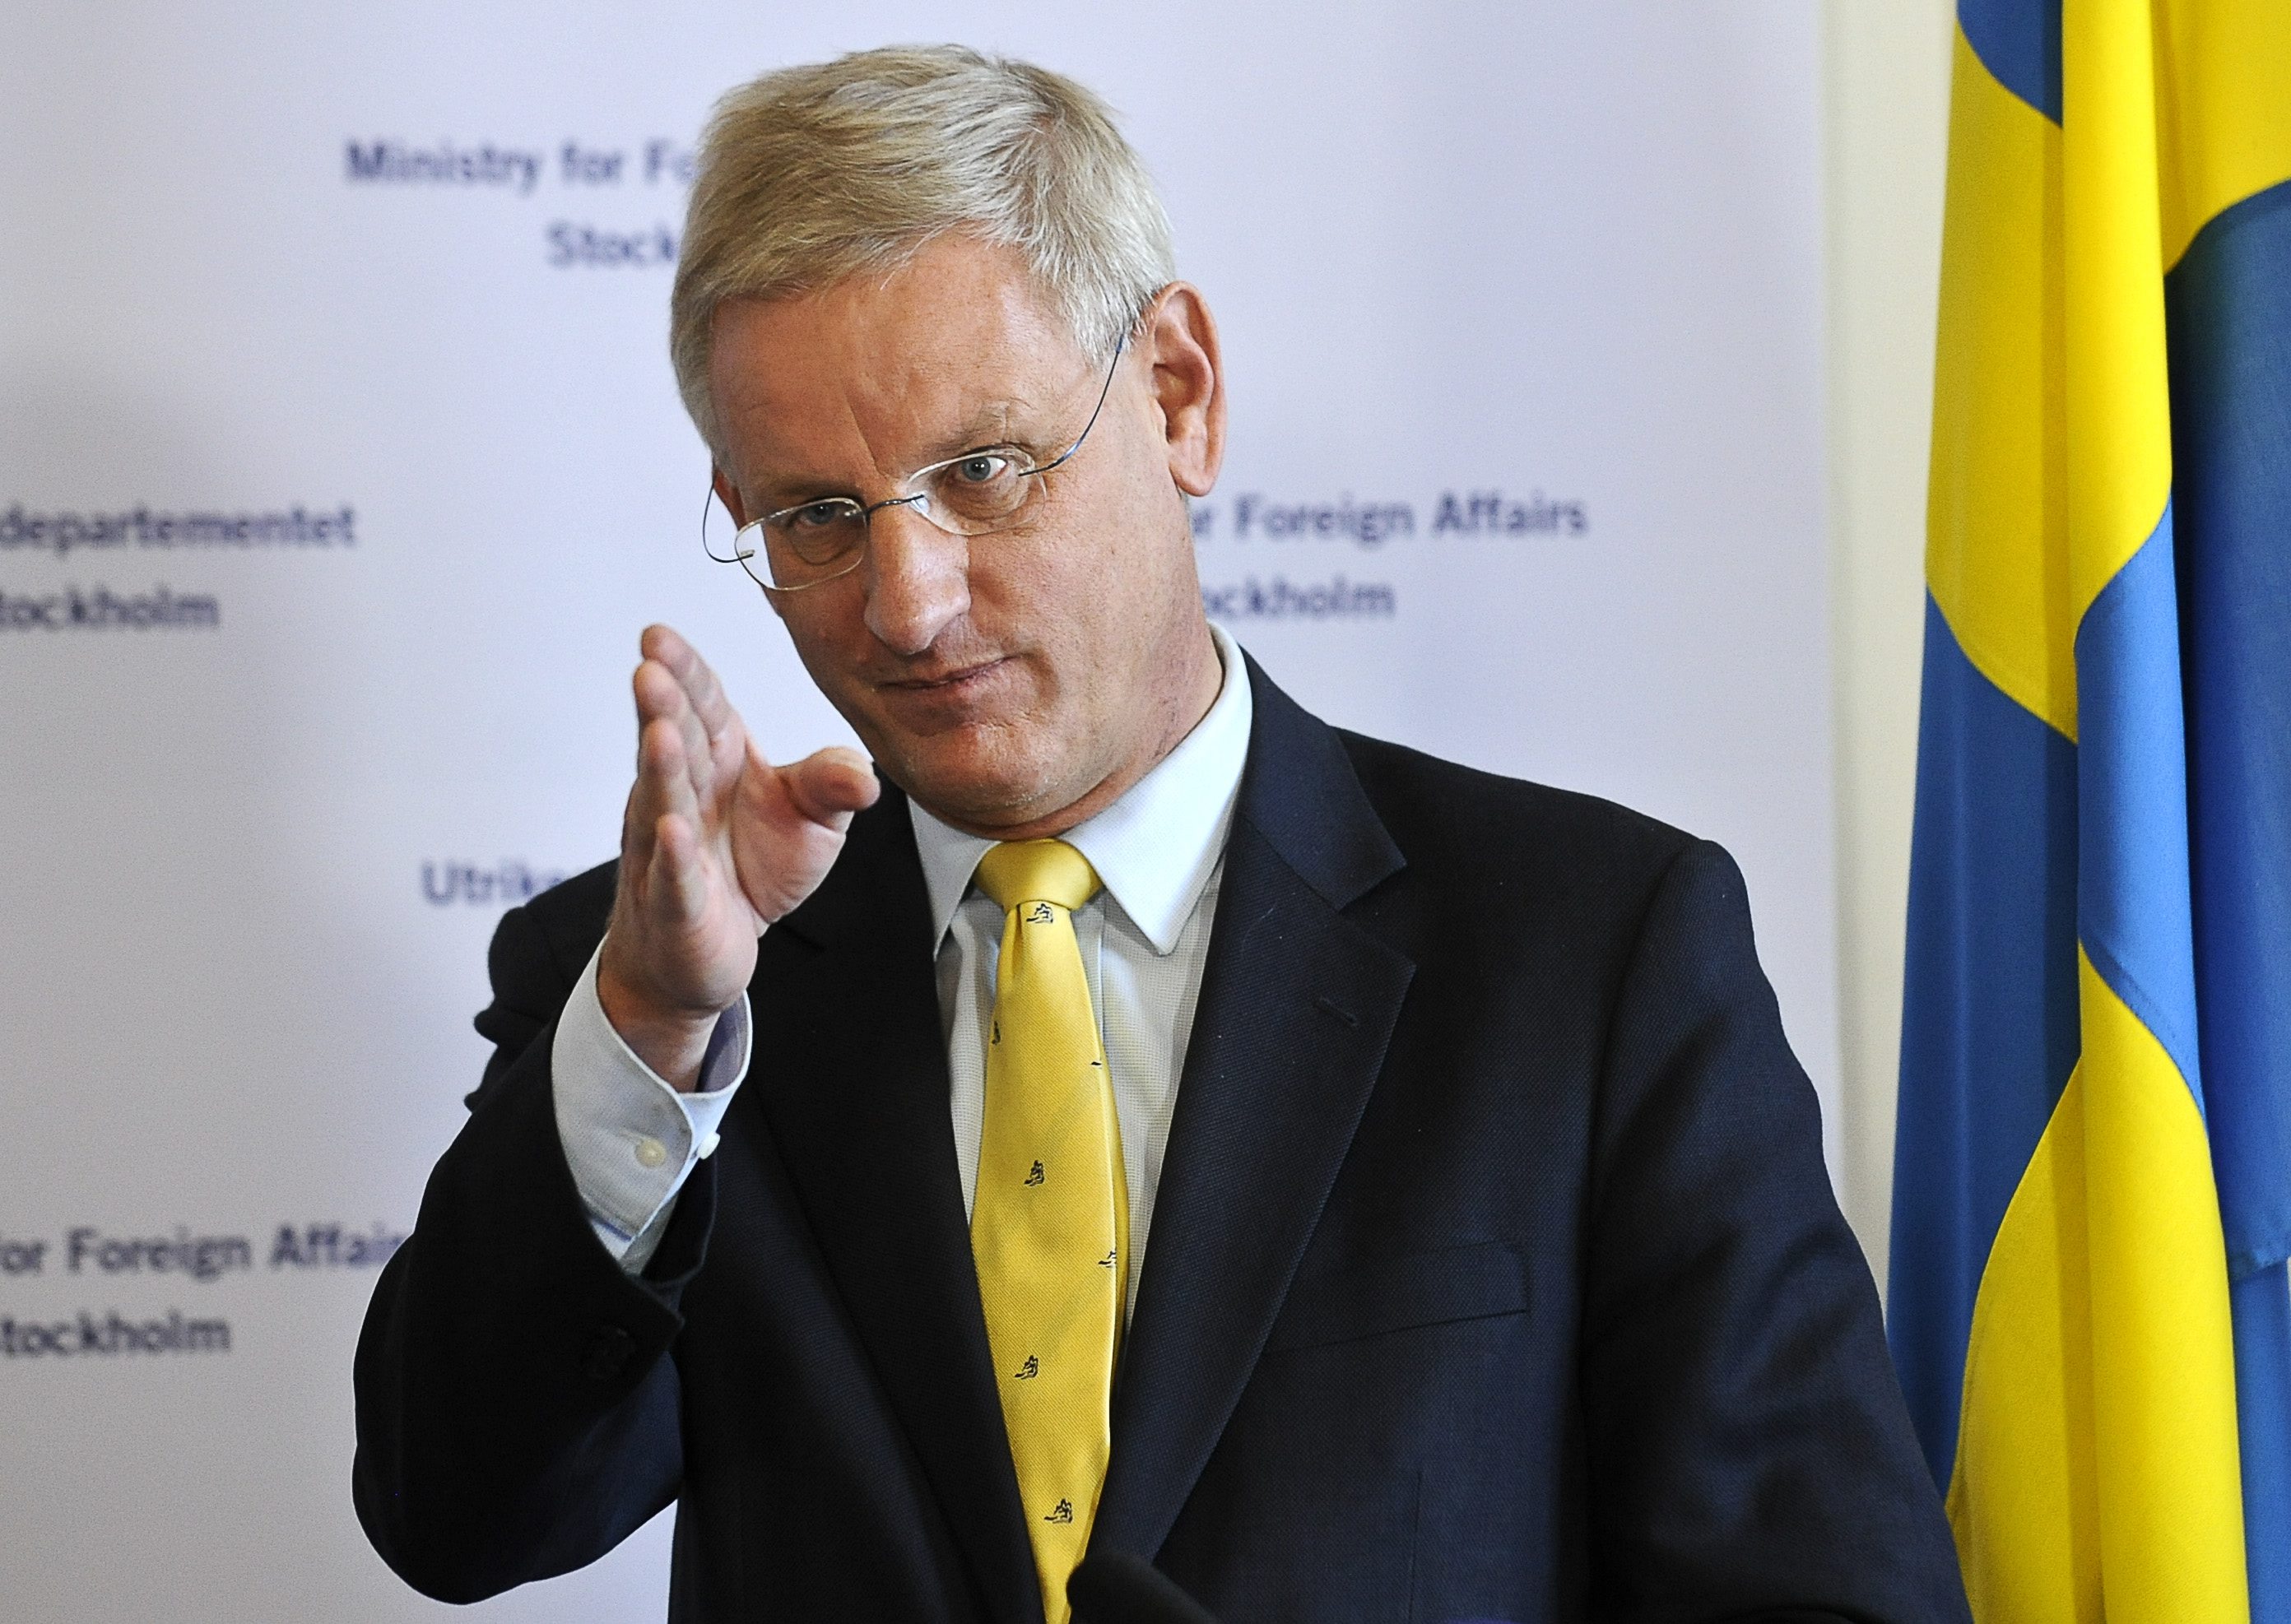 Alliansen, Carl Bildt, Politik